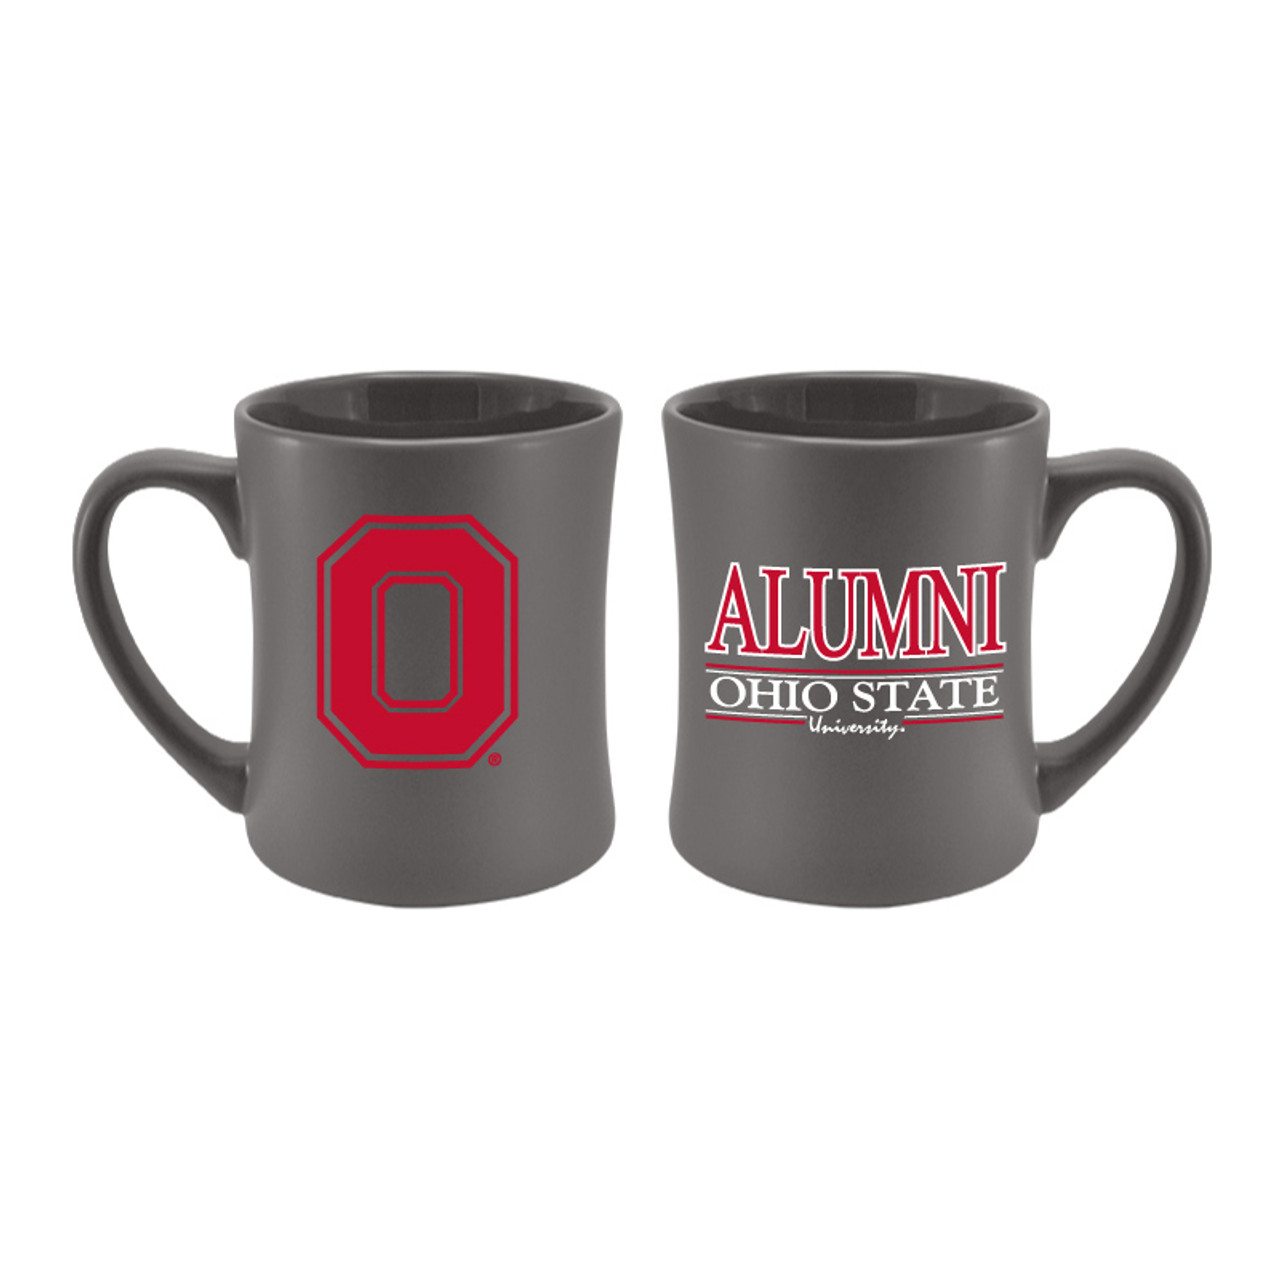 El Grande Ohio State Mug - College Traditions